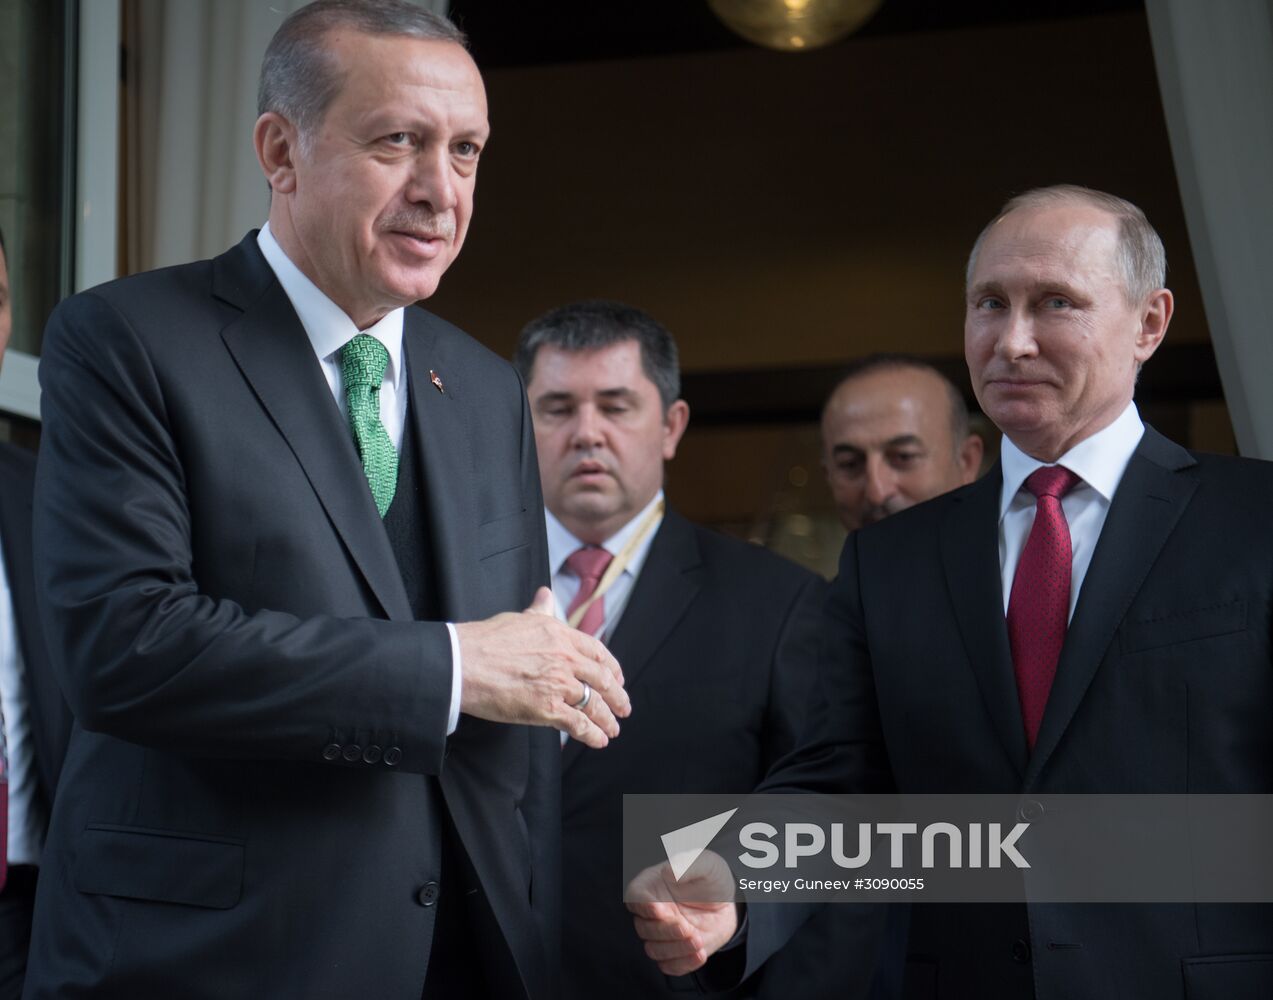 President Vladimir Putin meets with President of Turkey Recep Tayyip Erdogan